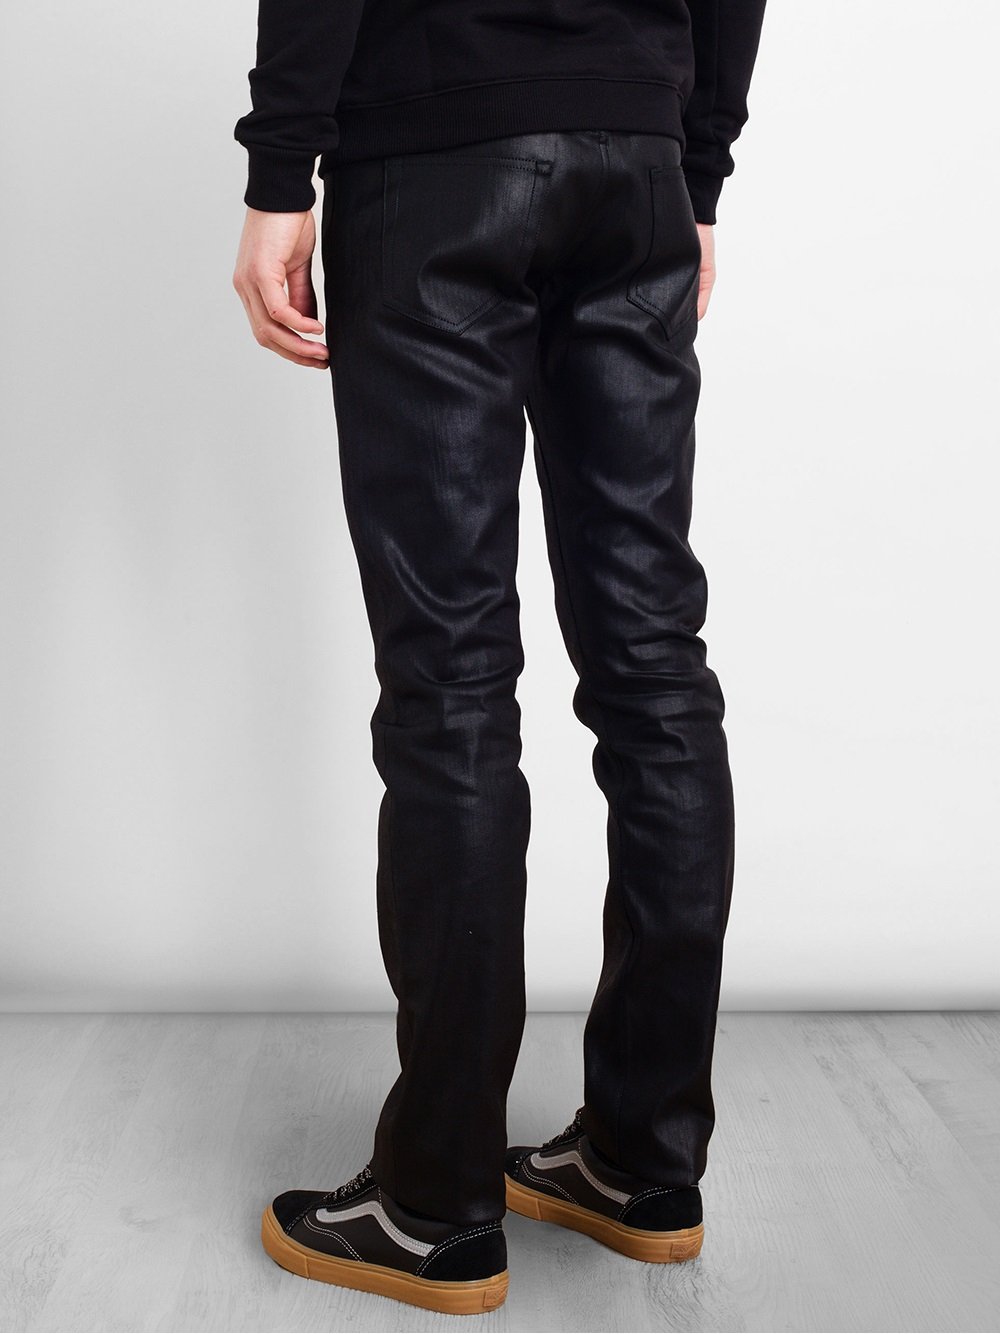 Lyst - Saint Laurent Coated Denim Jeans in Black for Men